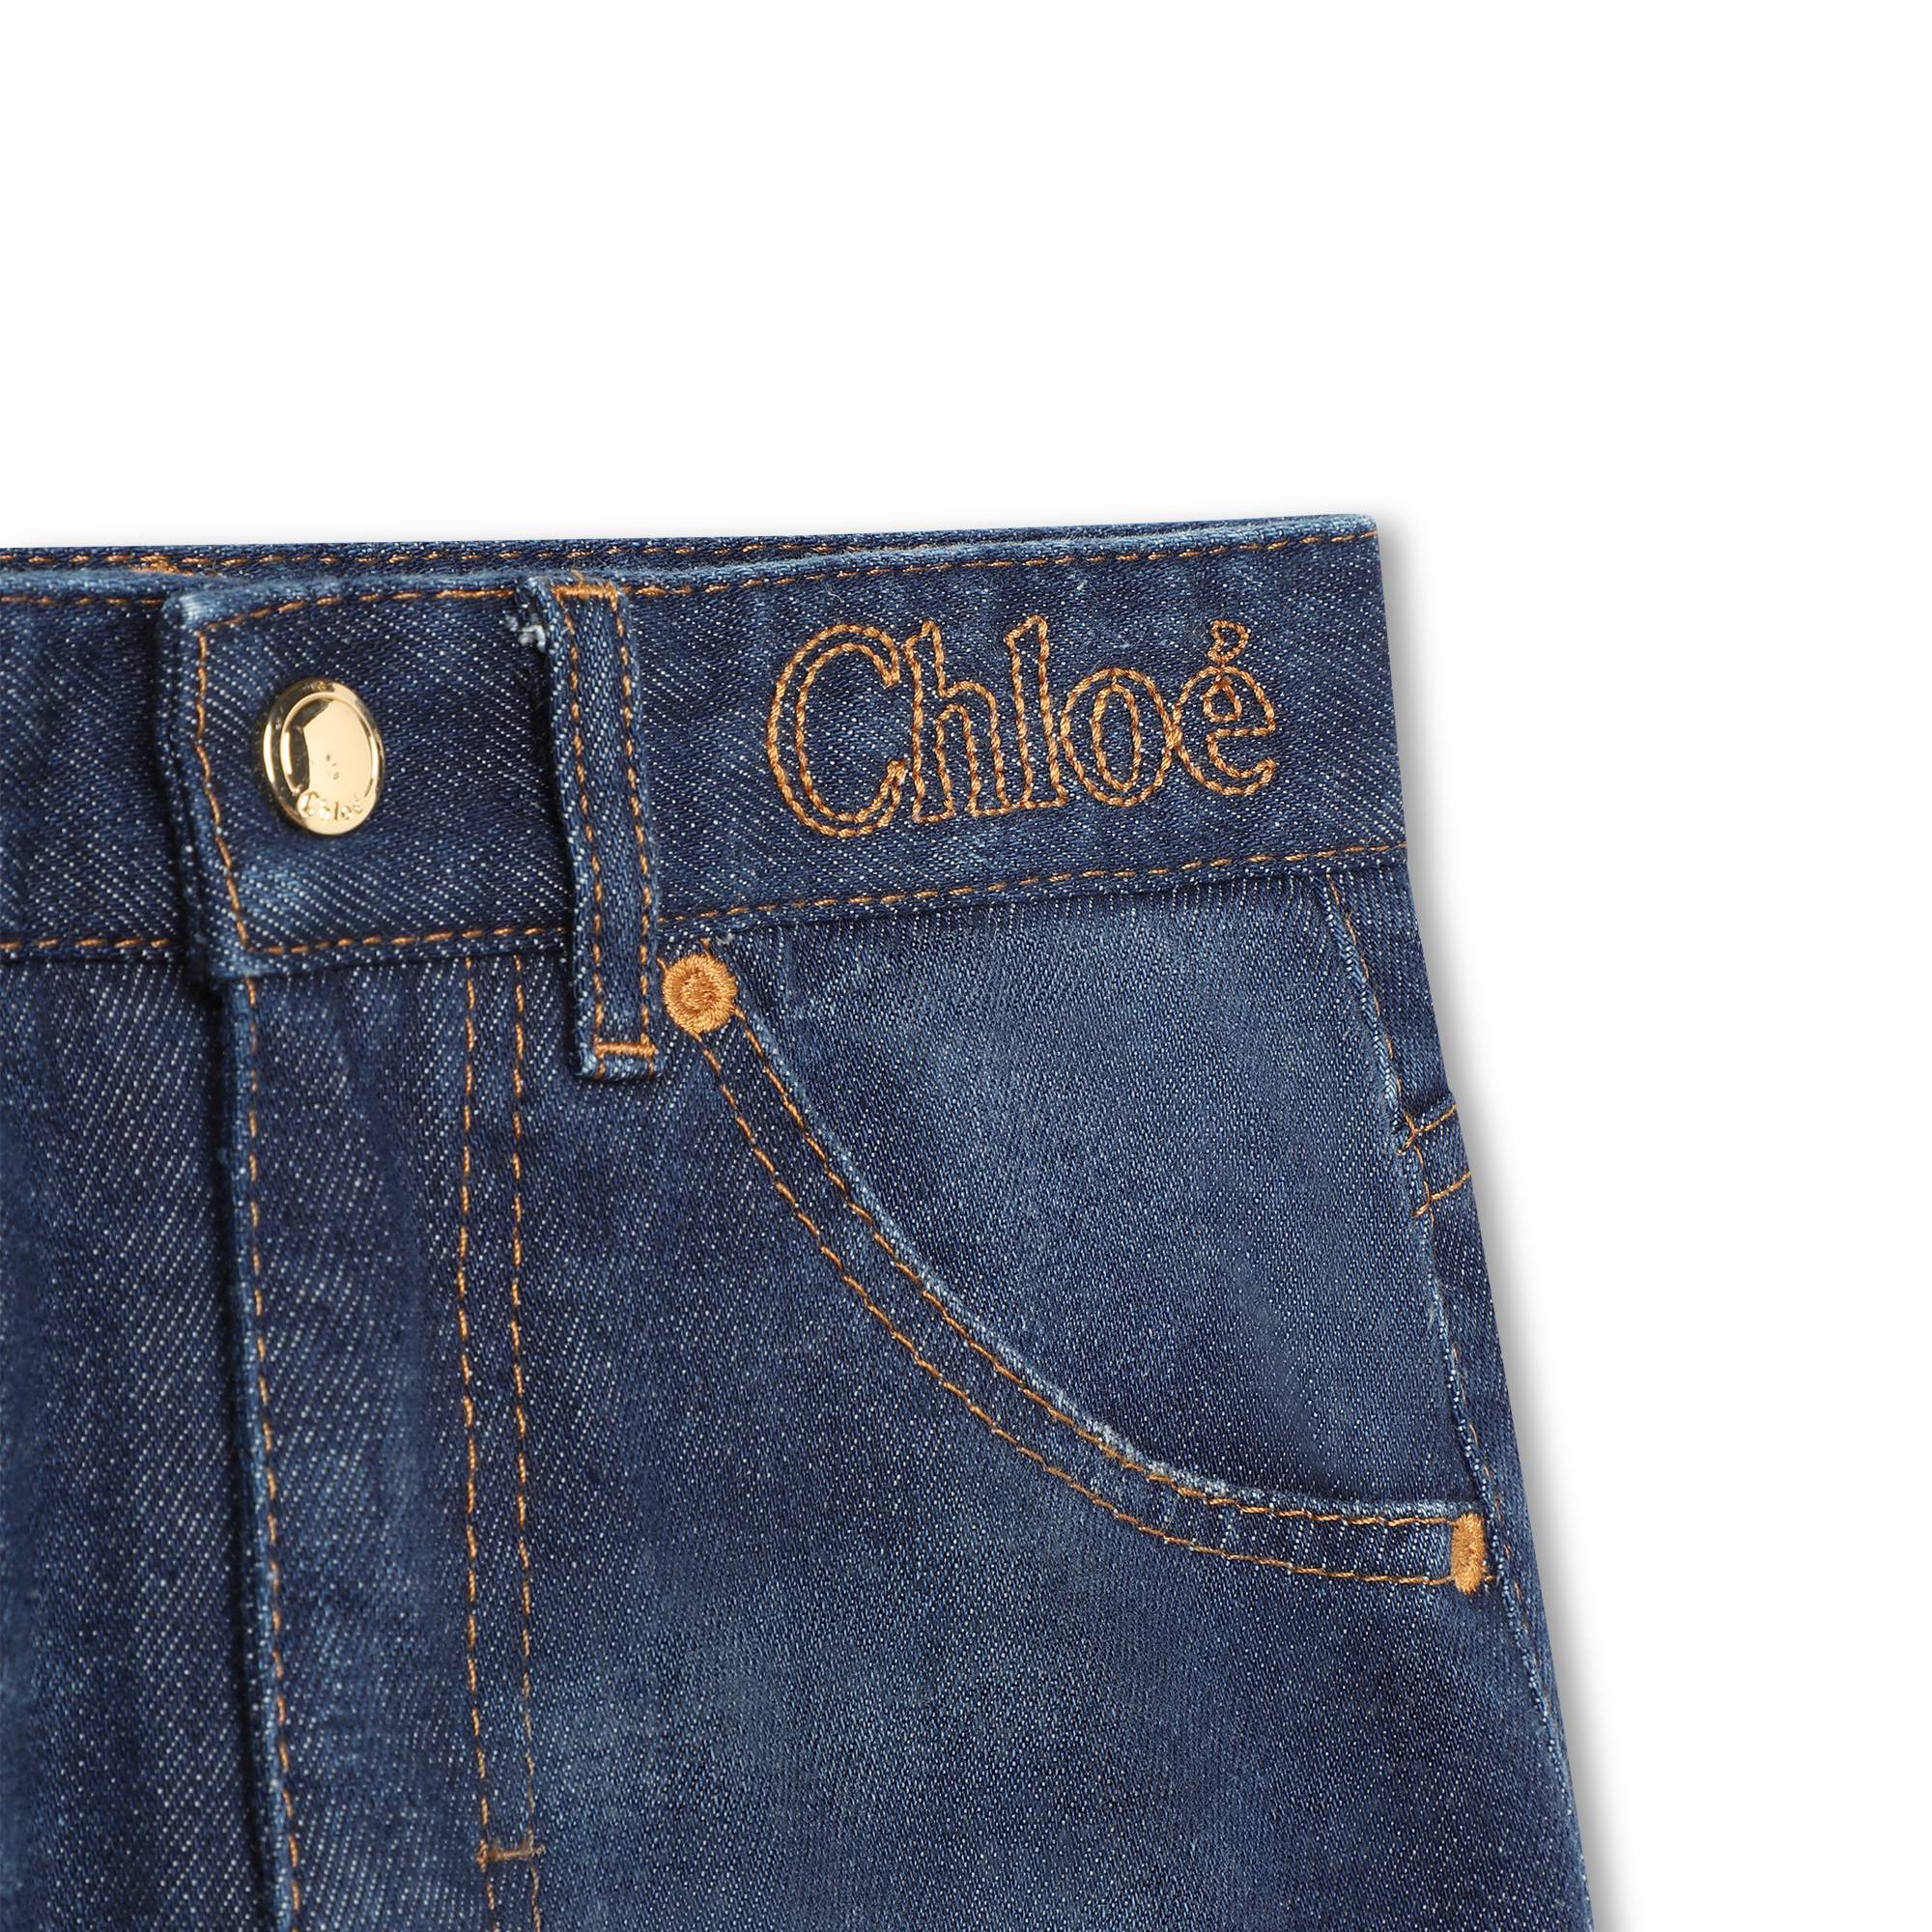 Chloe Girls Washed Jeans in Denim Blue